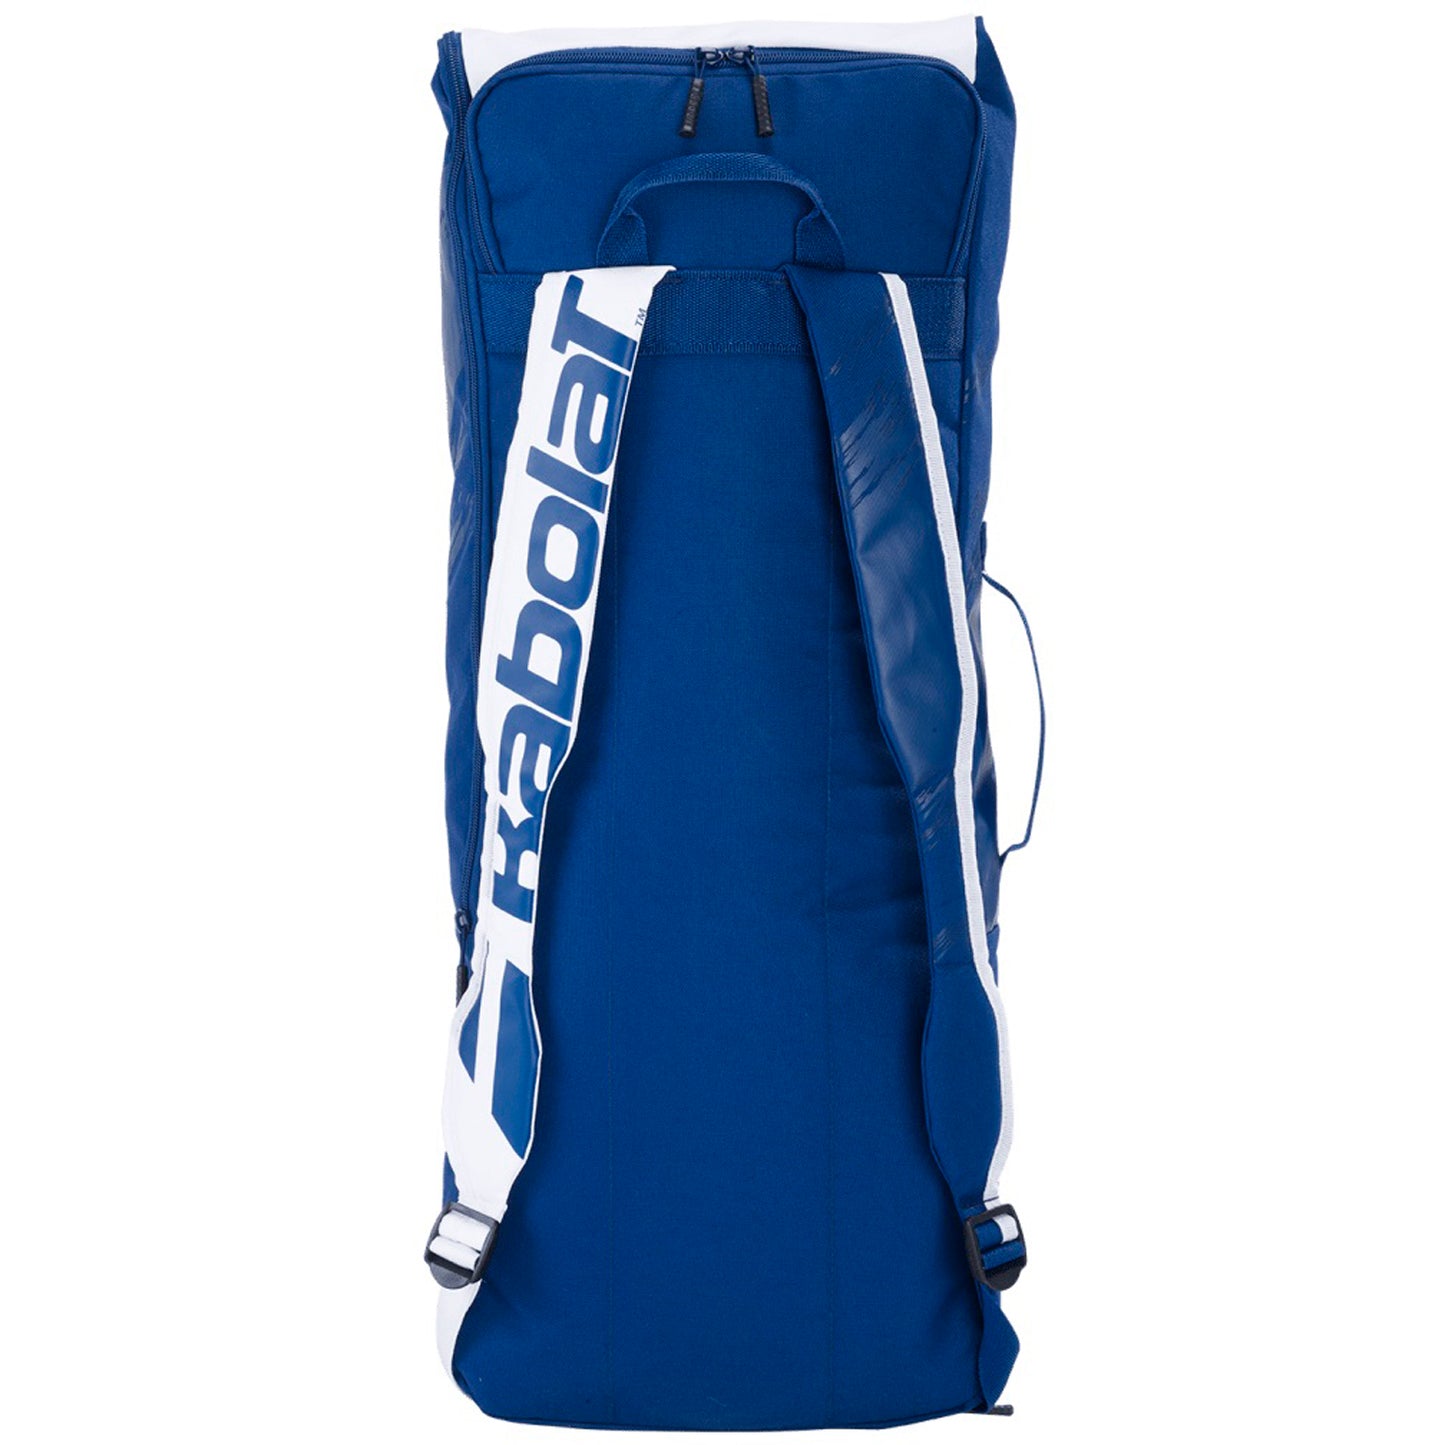 Babolat Backrack 2 Badminton Bag , Blue/White - Best Price online Prokicksports.com